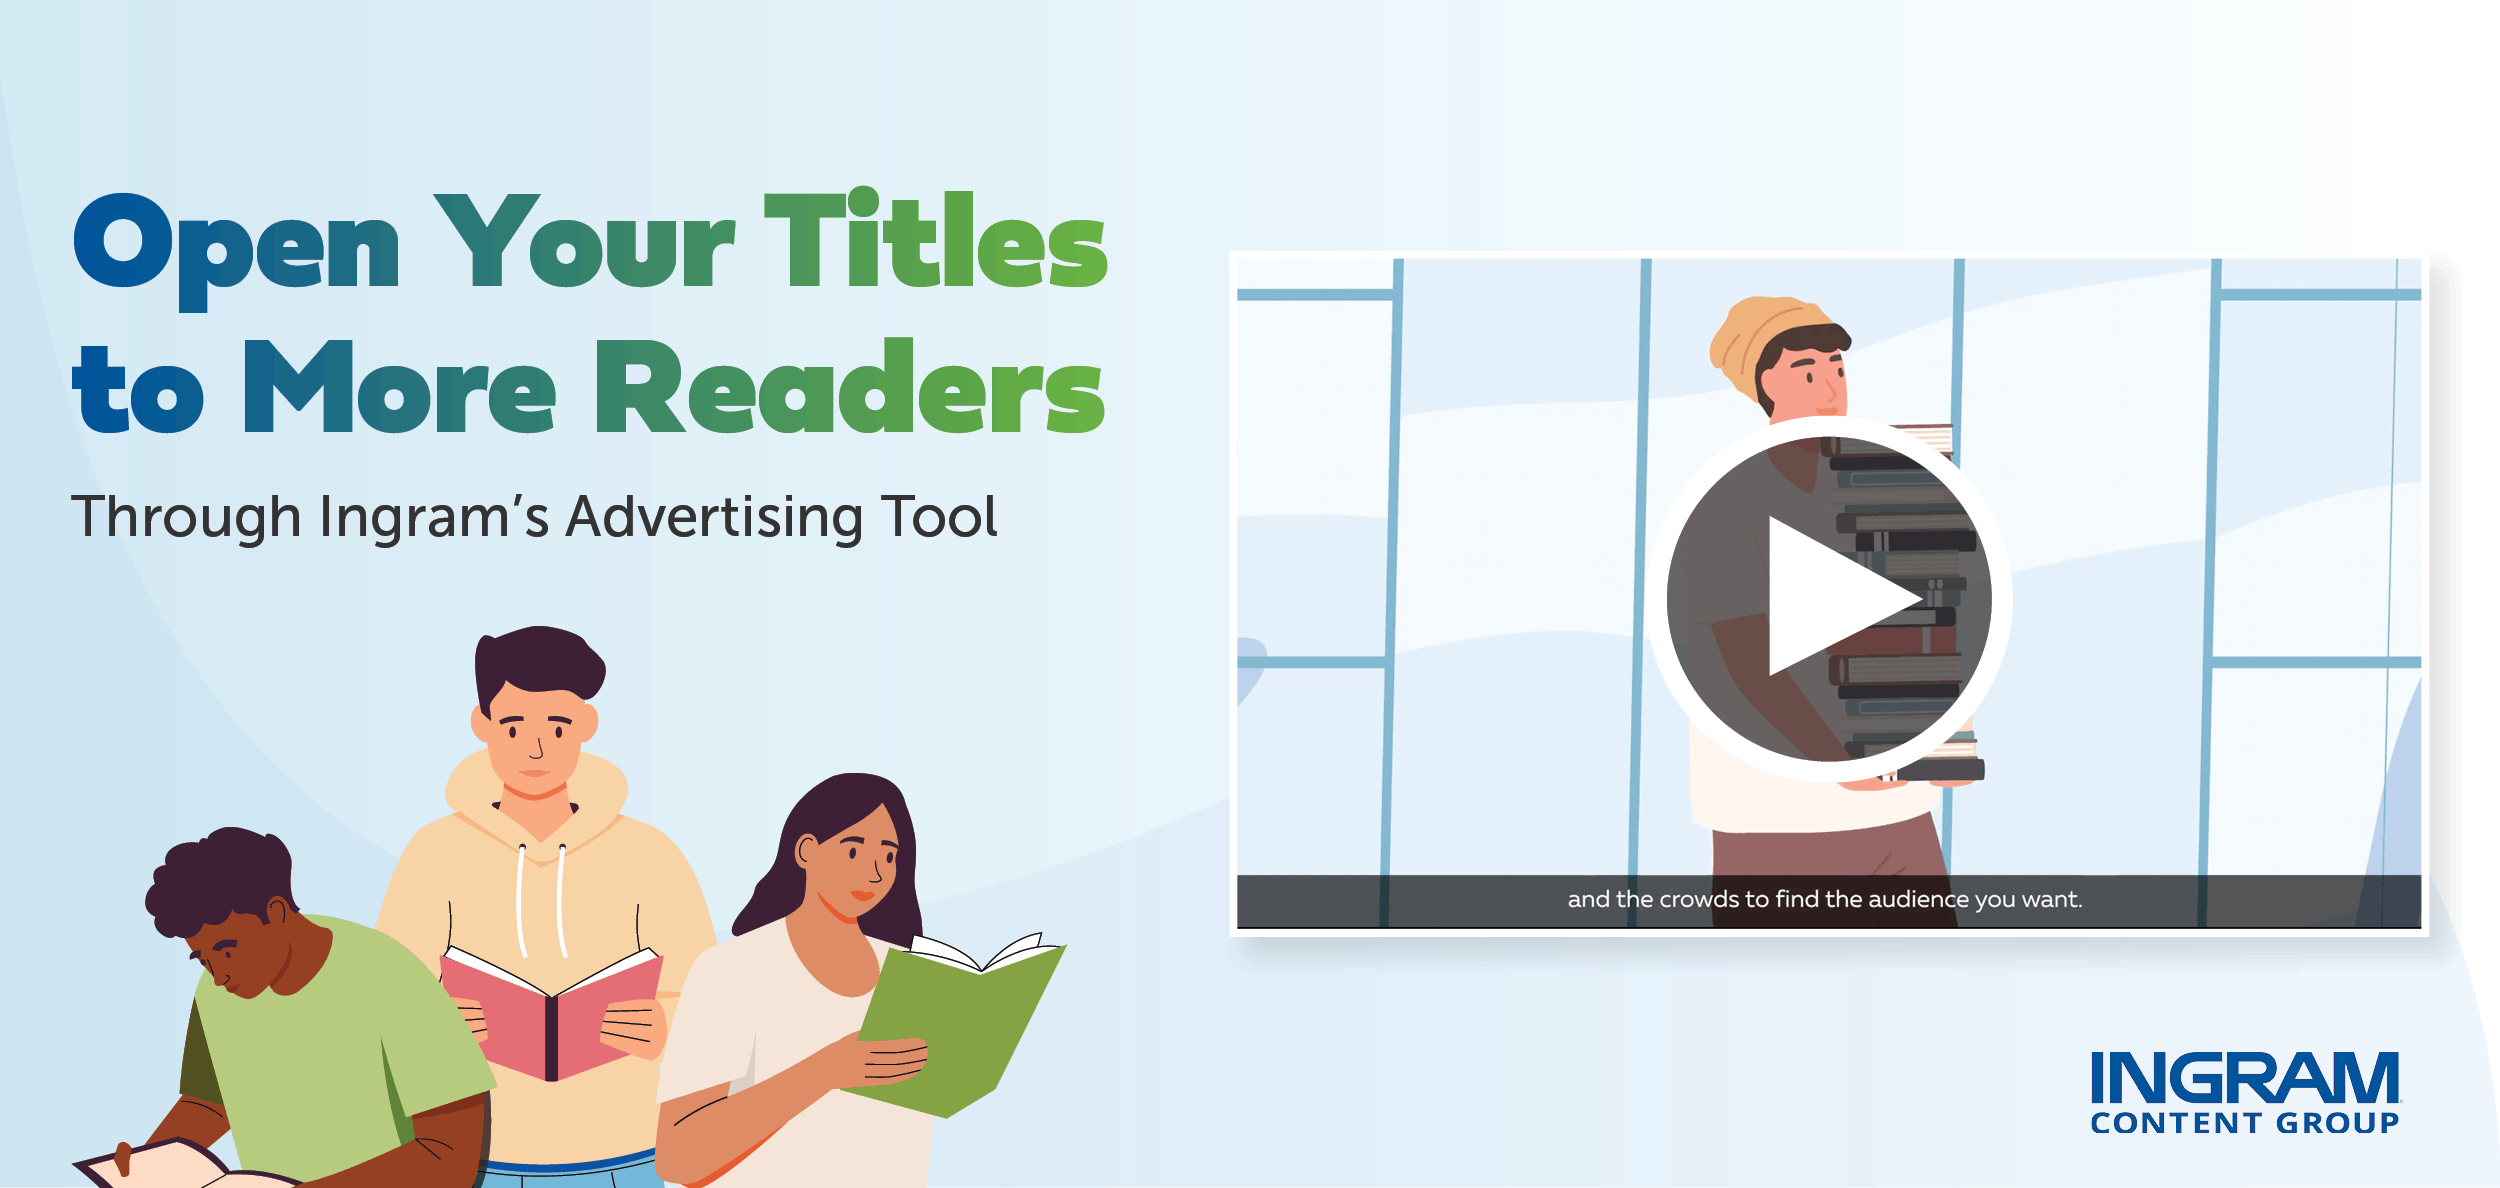 Ingram Content Group. Open your titles to more readers through Ingram's advertising tool.